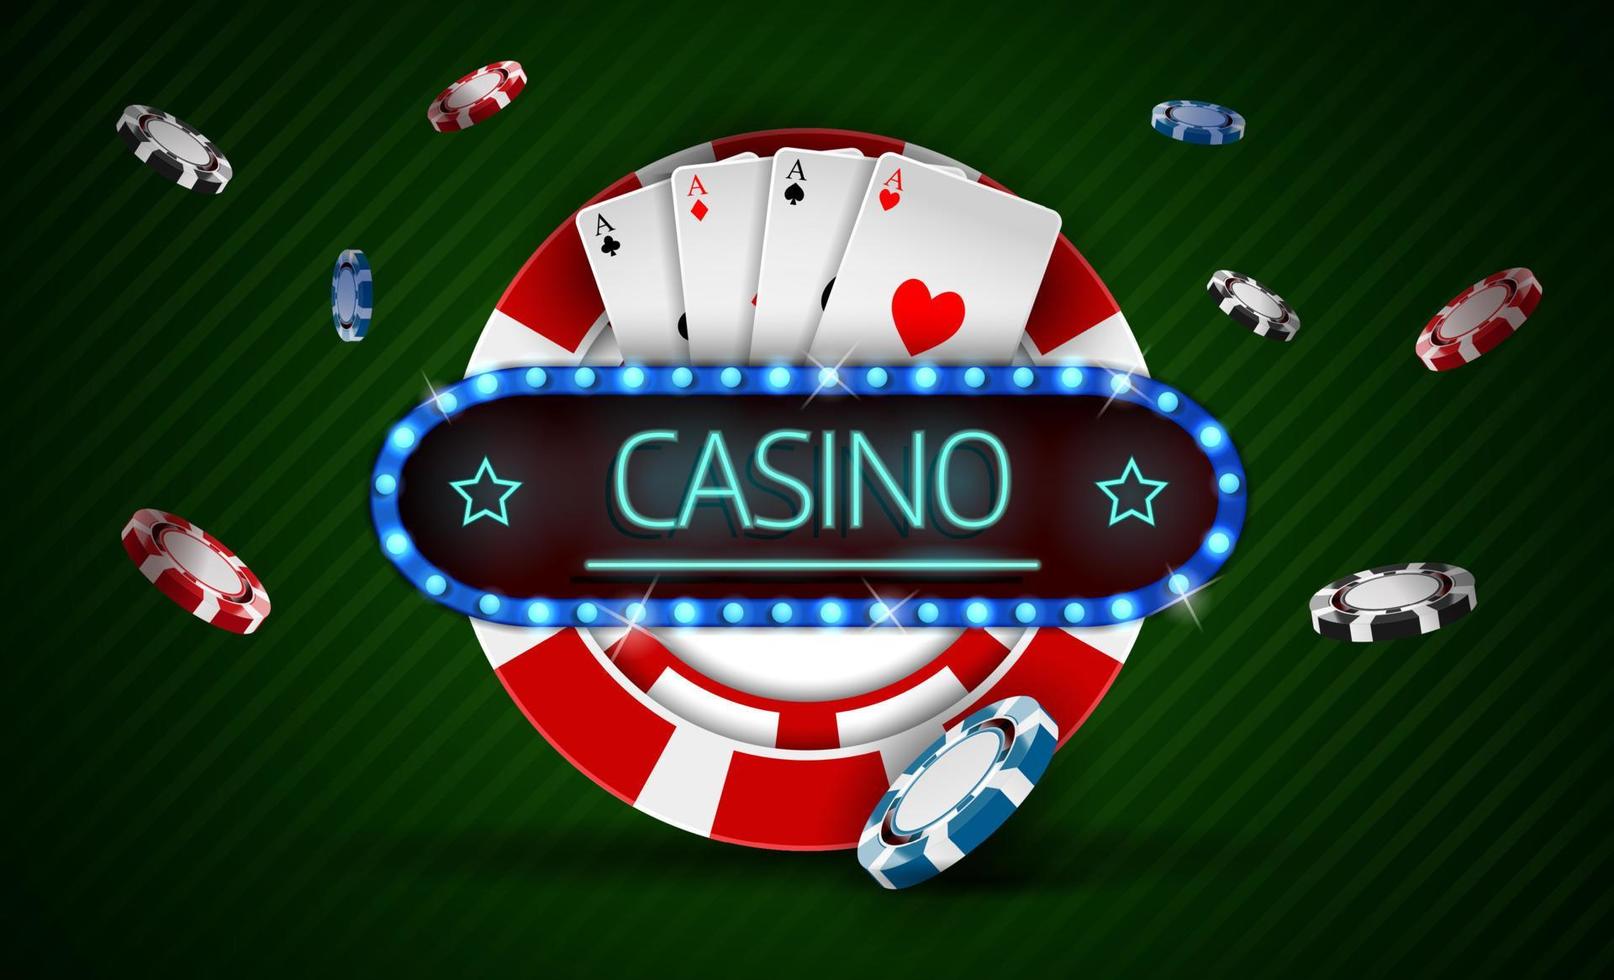 Casino chip with retro neon light sign vector